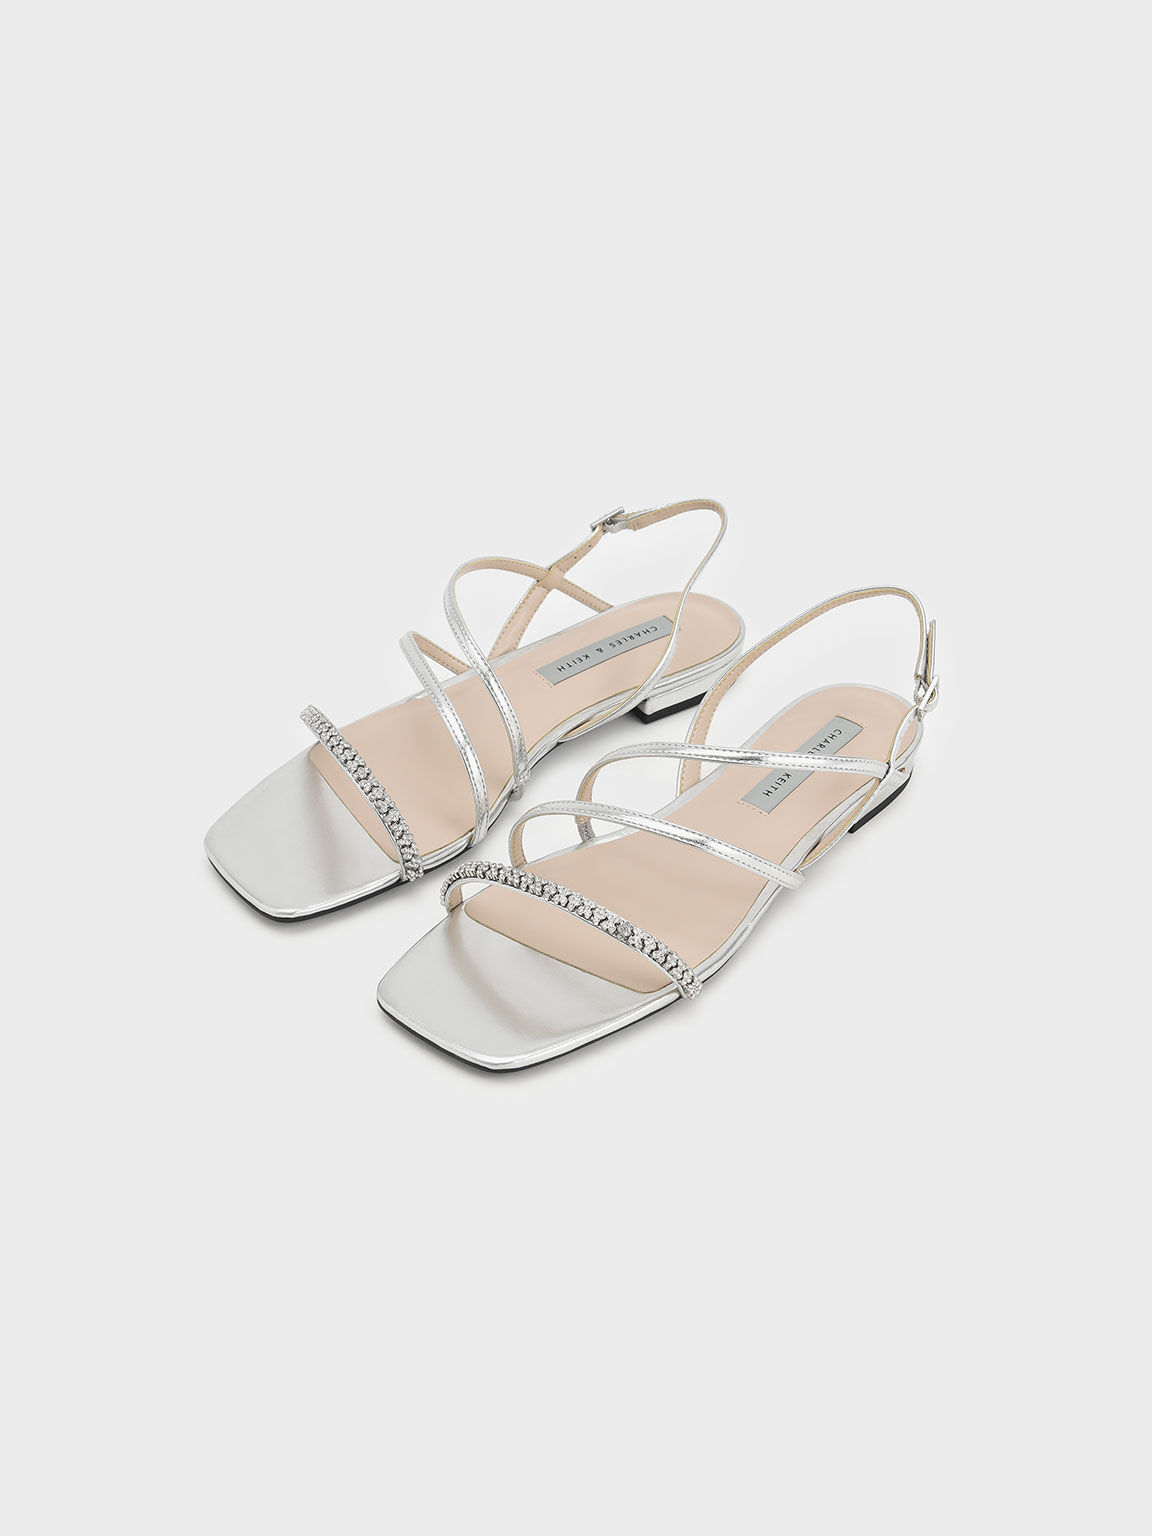 Gem-Encrusted Strappy Metallic Slingback Sandals, Silver, hi-res